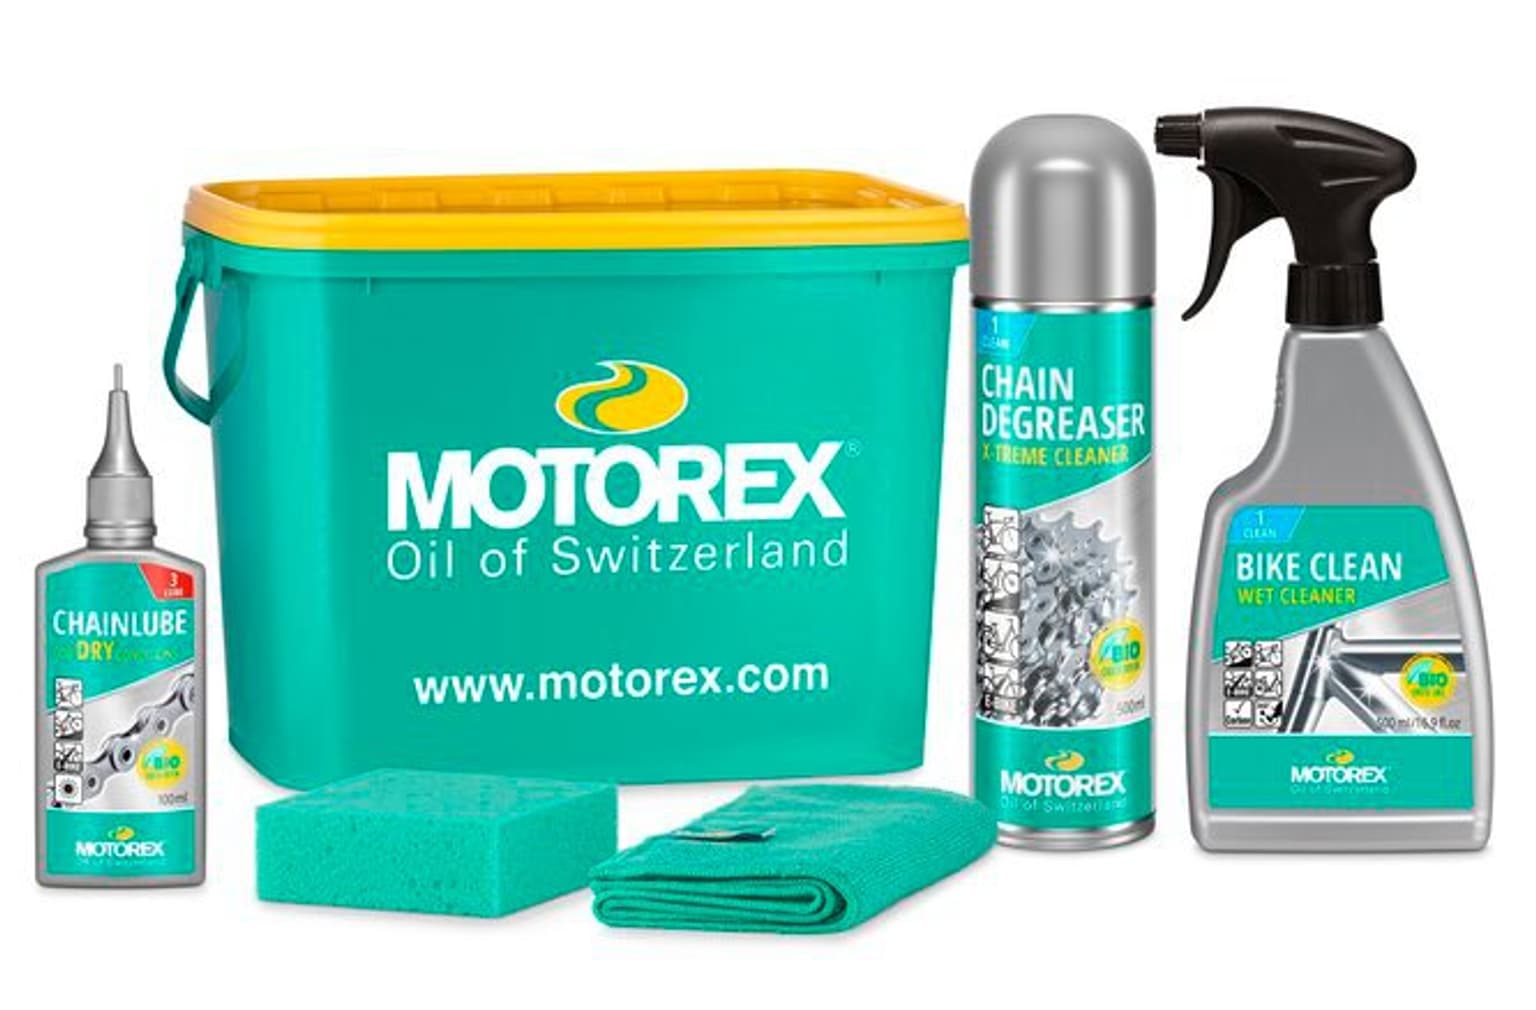 MOTOREX MOTOREX Seau pour kit de nettoyage de vélo Kit de nettoyage 1